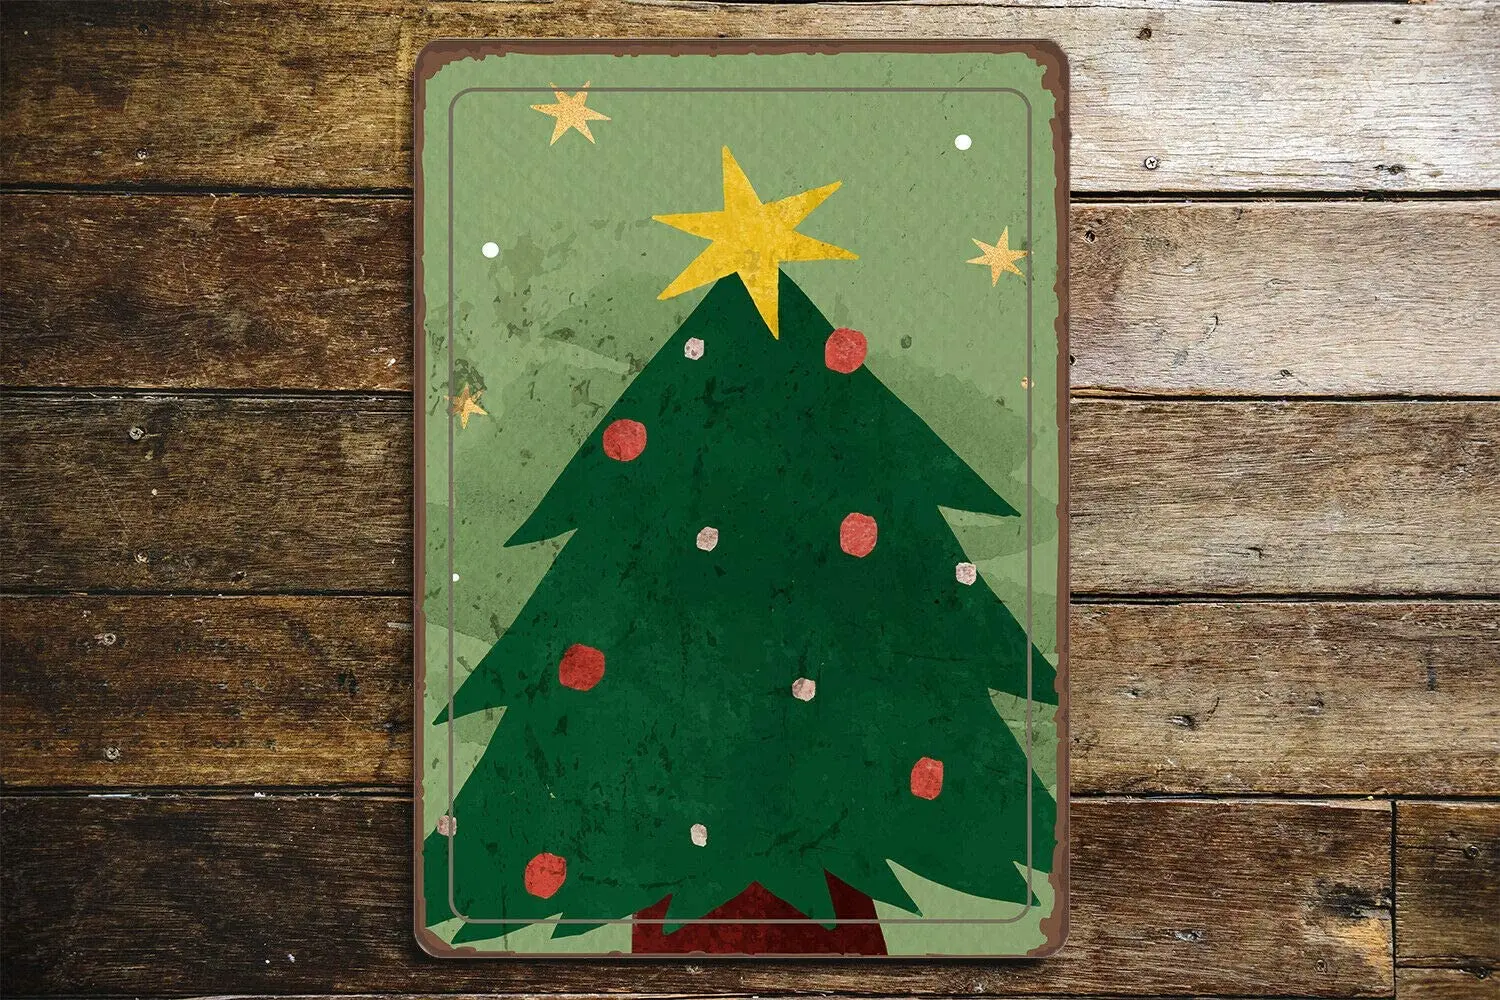 

ZMKDLL Merry Christmas Tree Vintage Enamel Metal Tin Sign Wall Plaque Home Decoration Retro Nostalgic Art Poster Dimensions